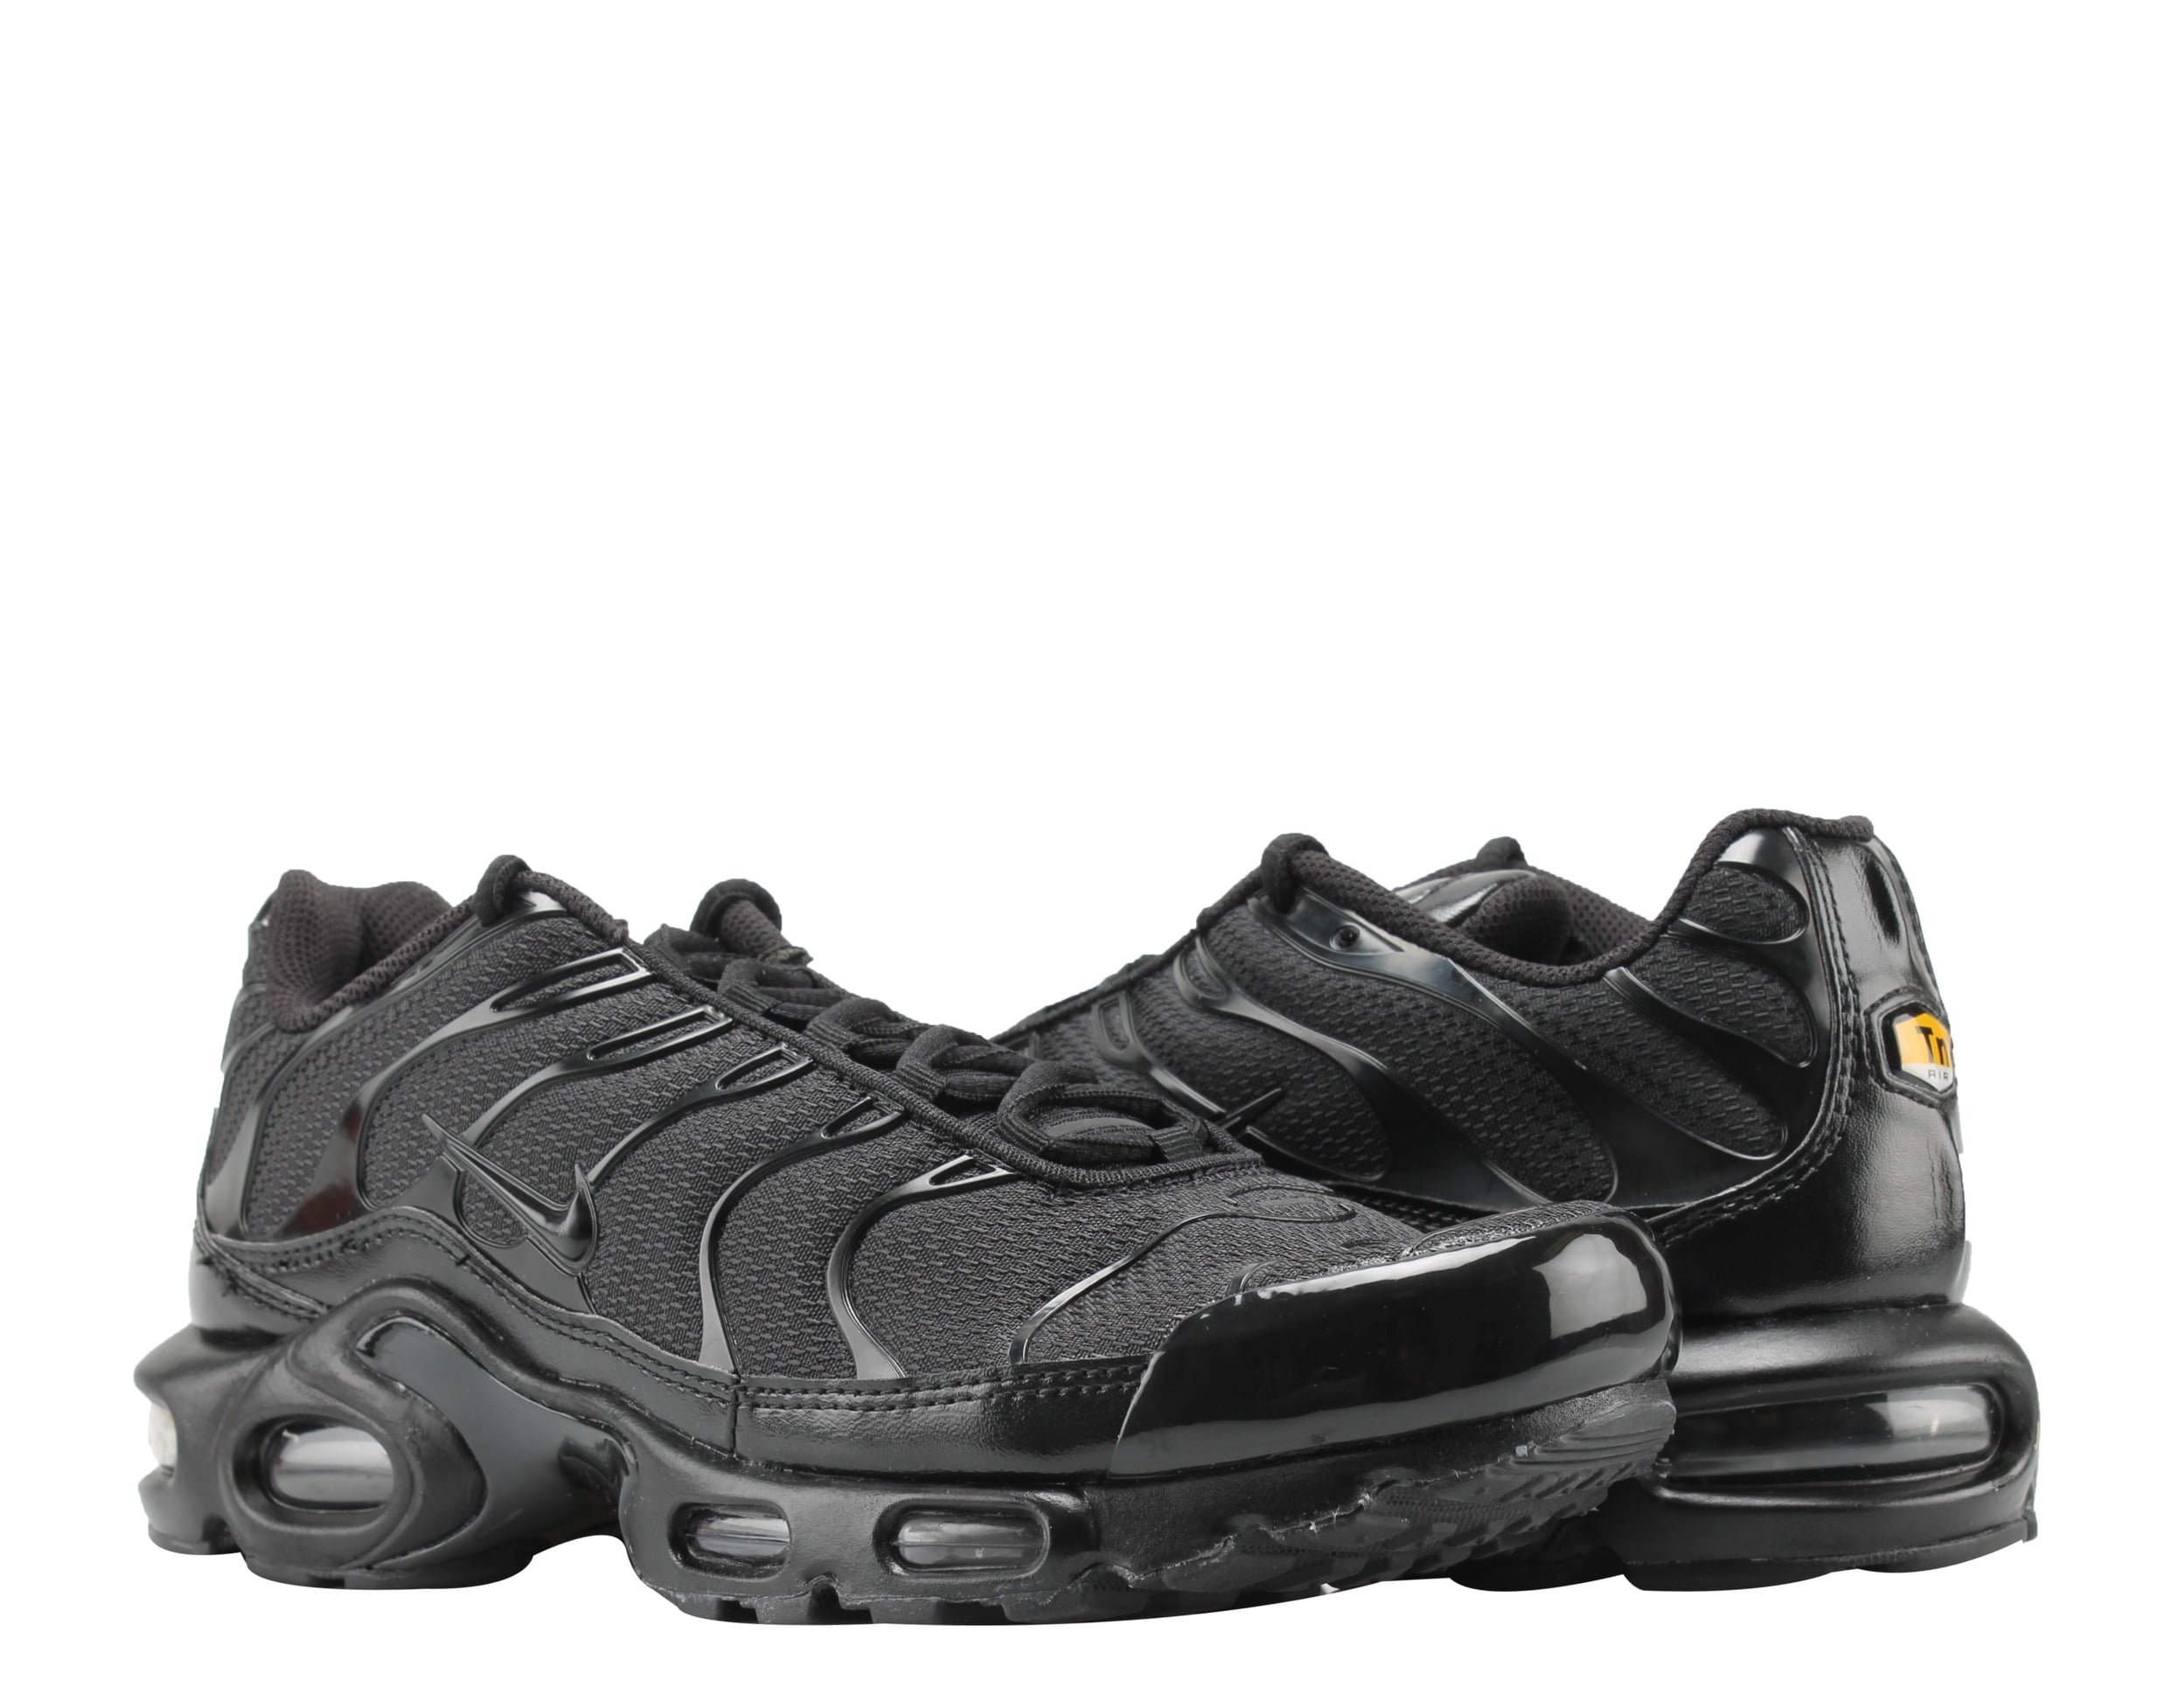 stang Pil intellektuel Men's Nike Air Max Plus Black/Black-Black (604133 050) - 7.5 - Walmart.com